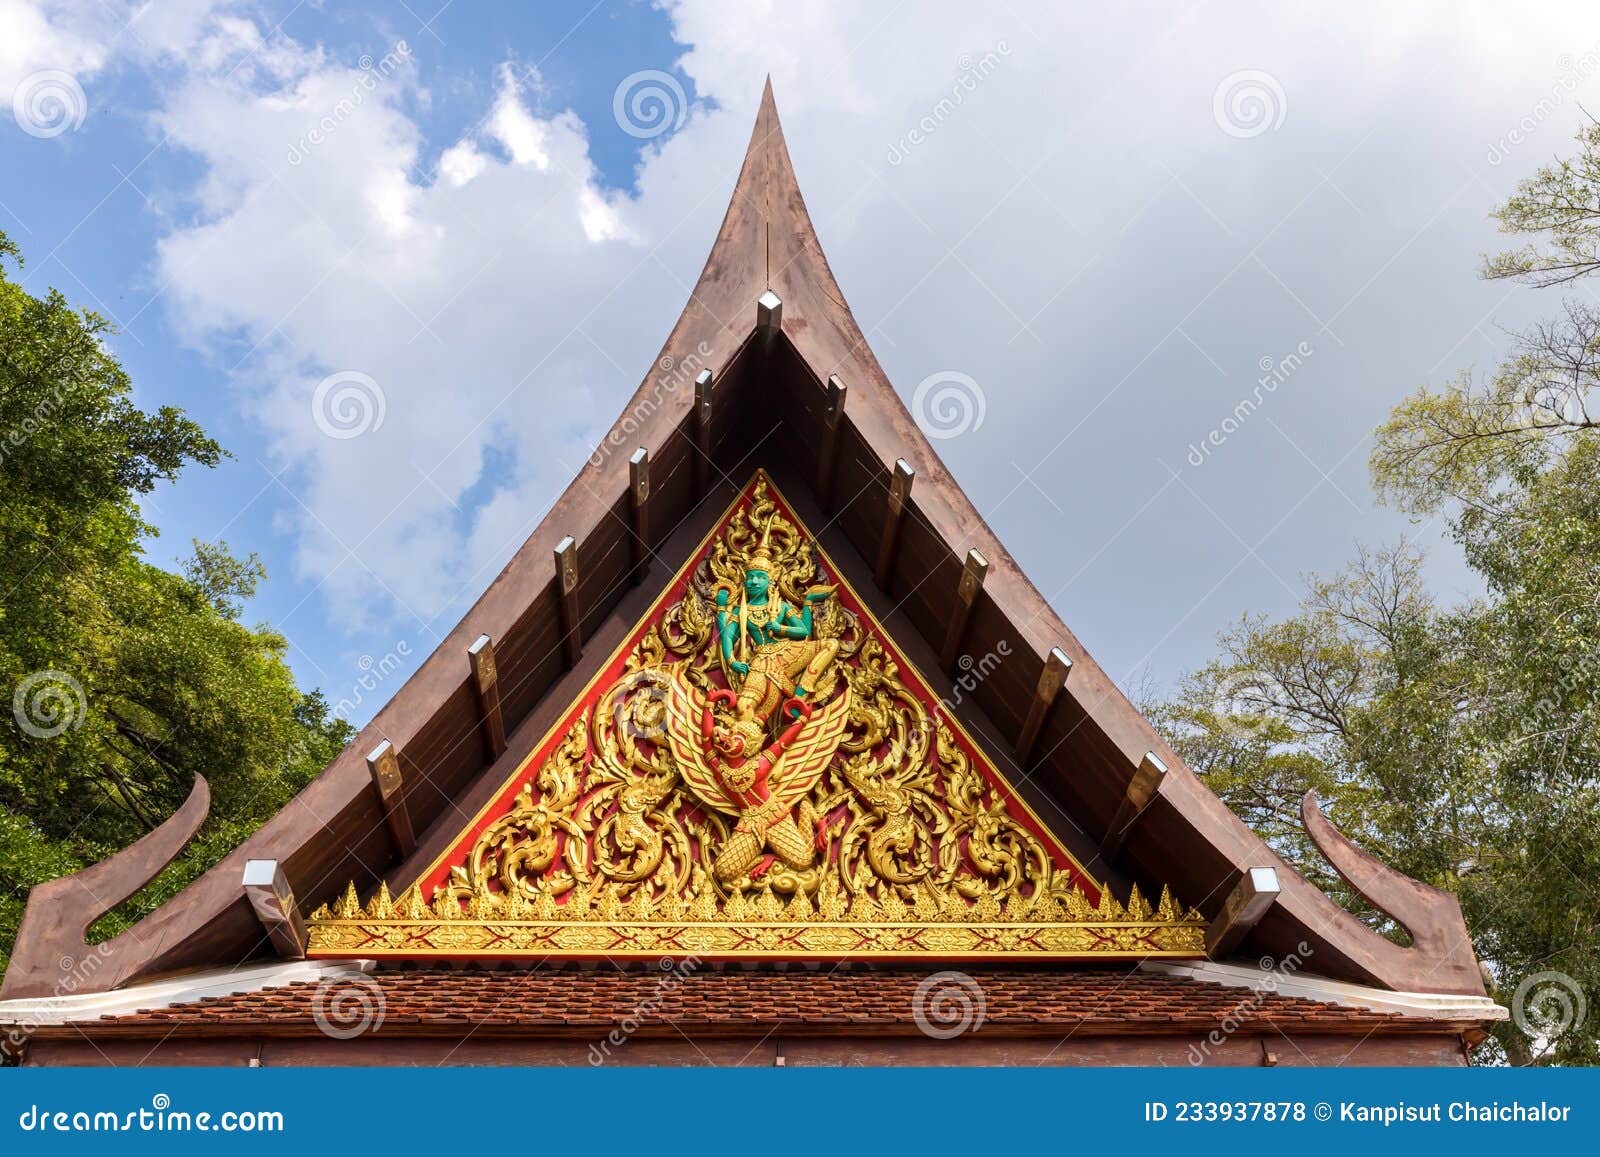 Genreric Thai Art Sculpture To Decorate Home, Building, Temple ...